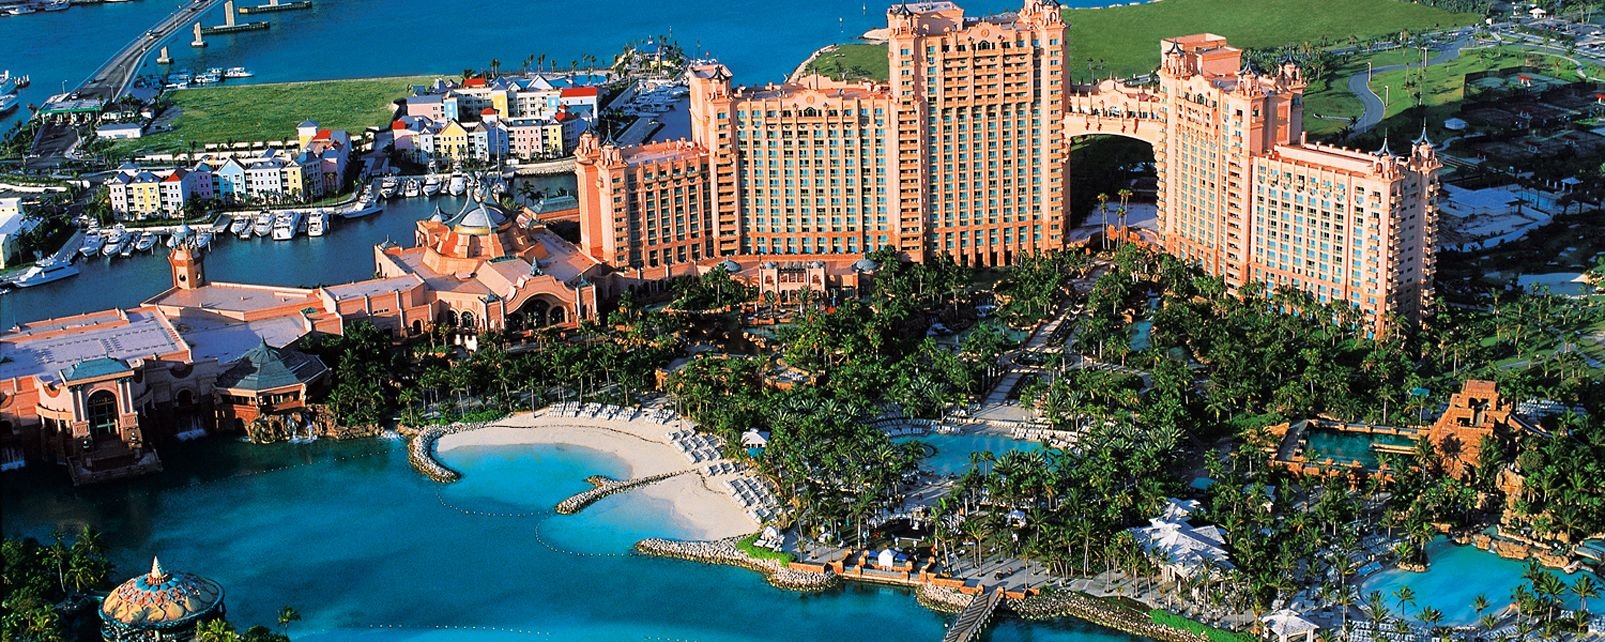 Hotel Atlantis - Bahamas